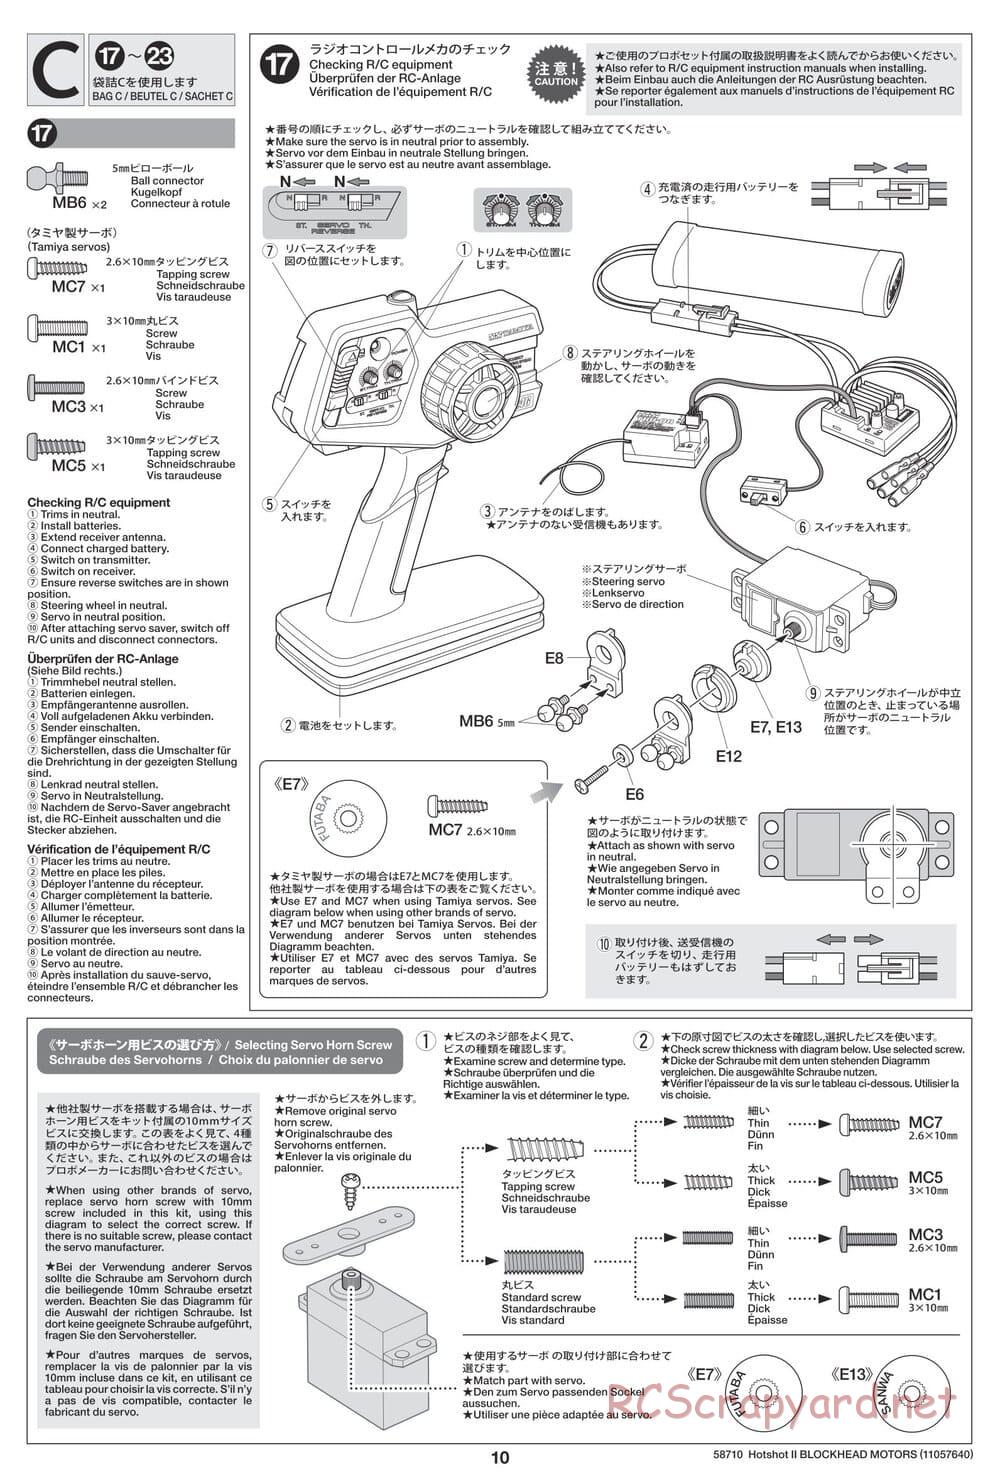 Tamiya - Hotshot II Blockhead Motors - HS Chassis - Manual - Page 10